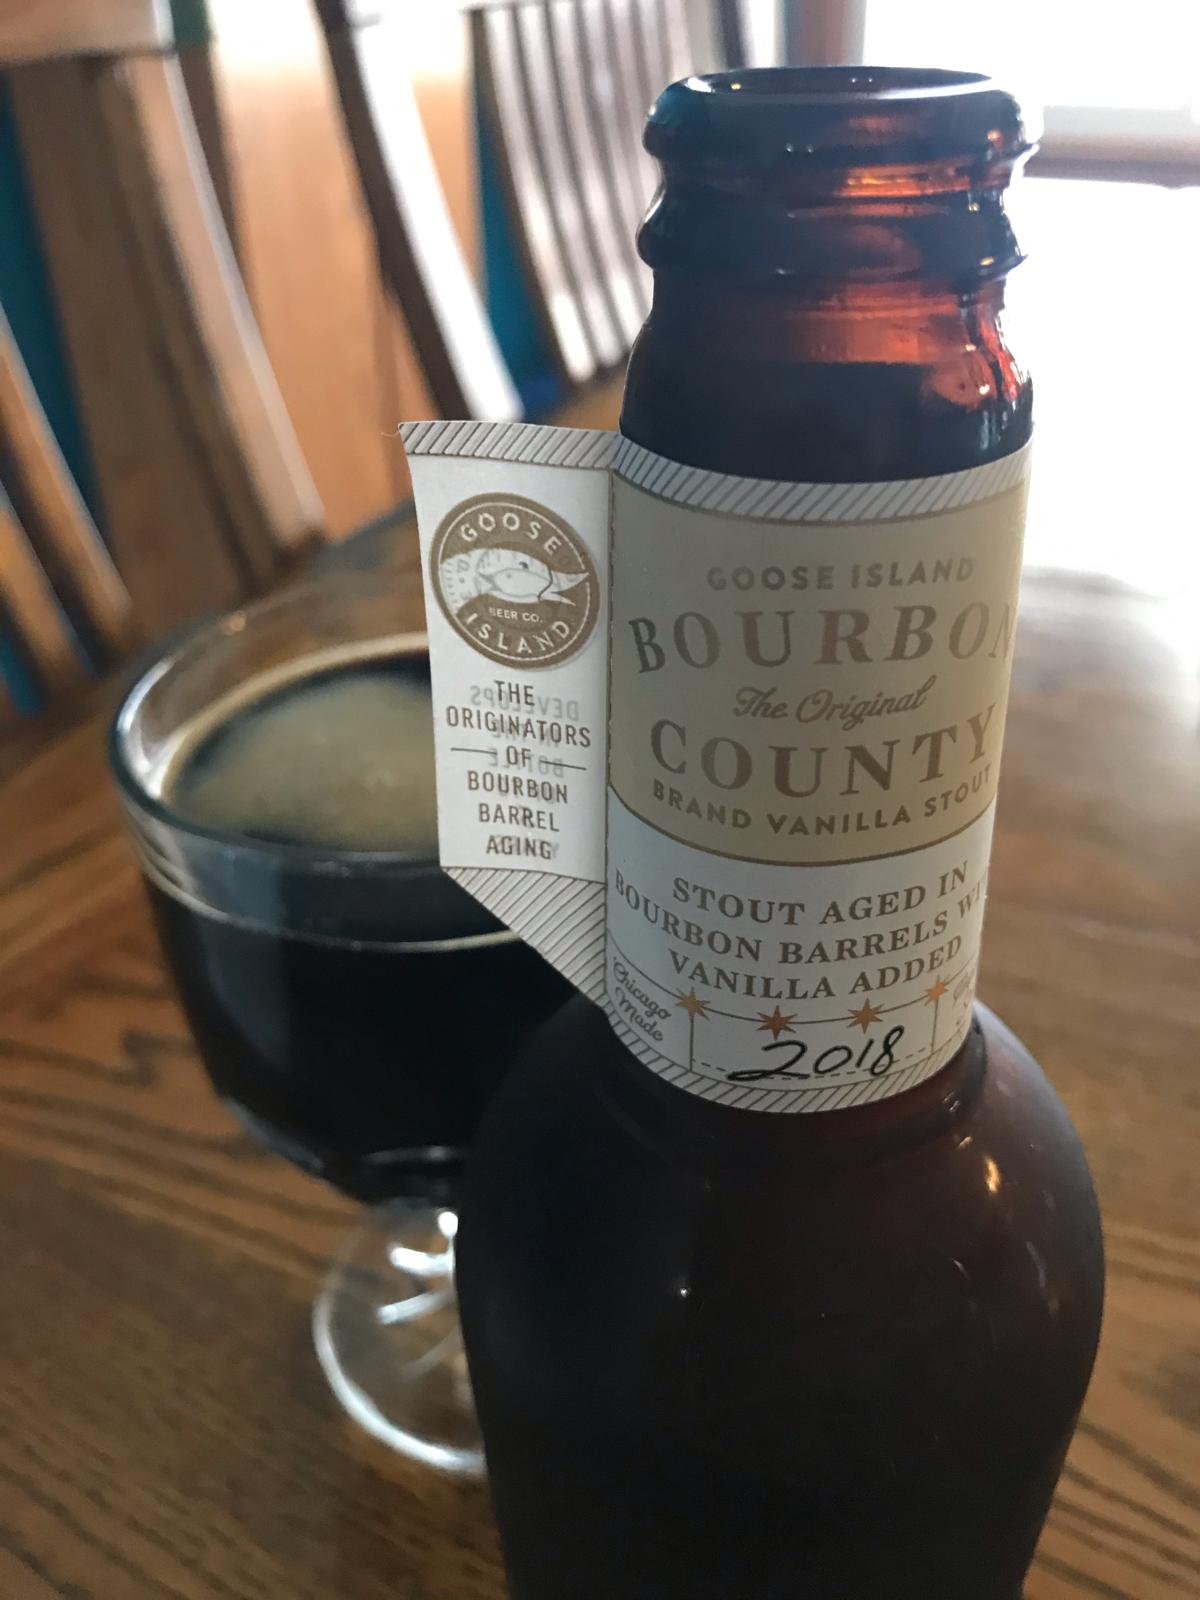 Bourbon County Brand - Vanilla Stout (2018)